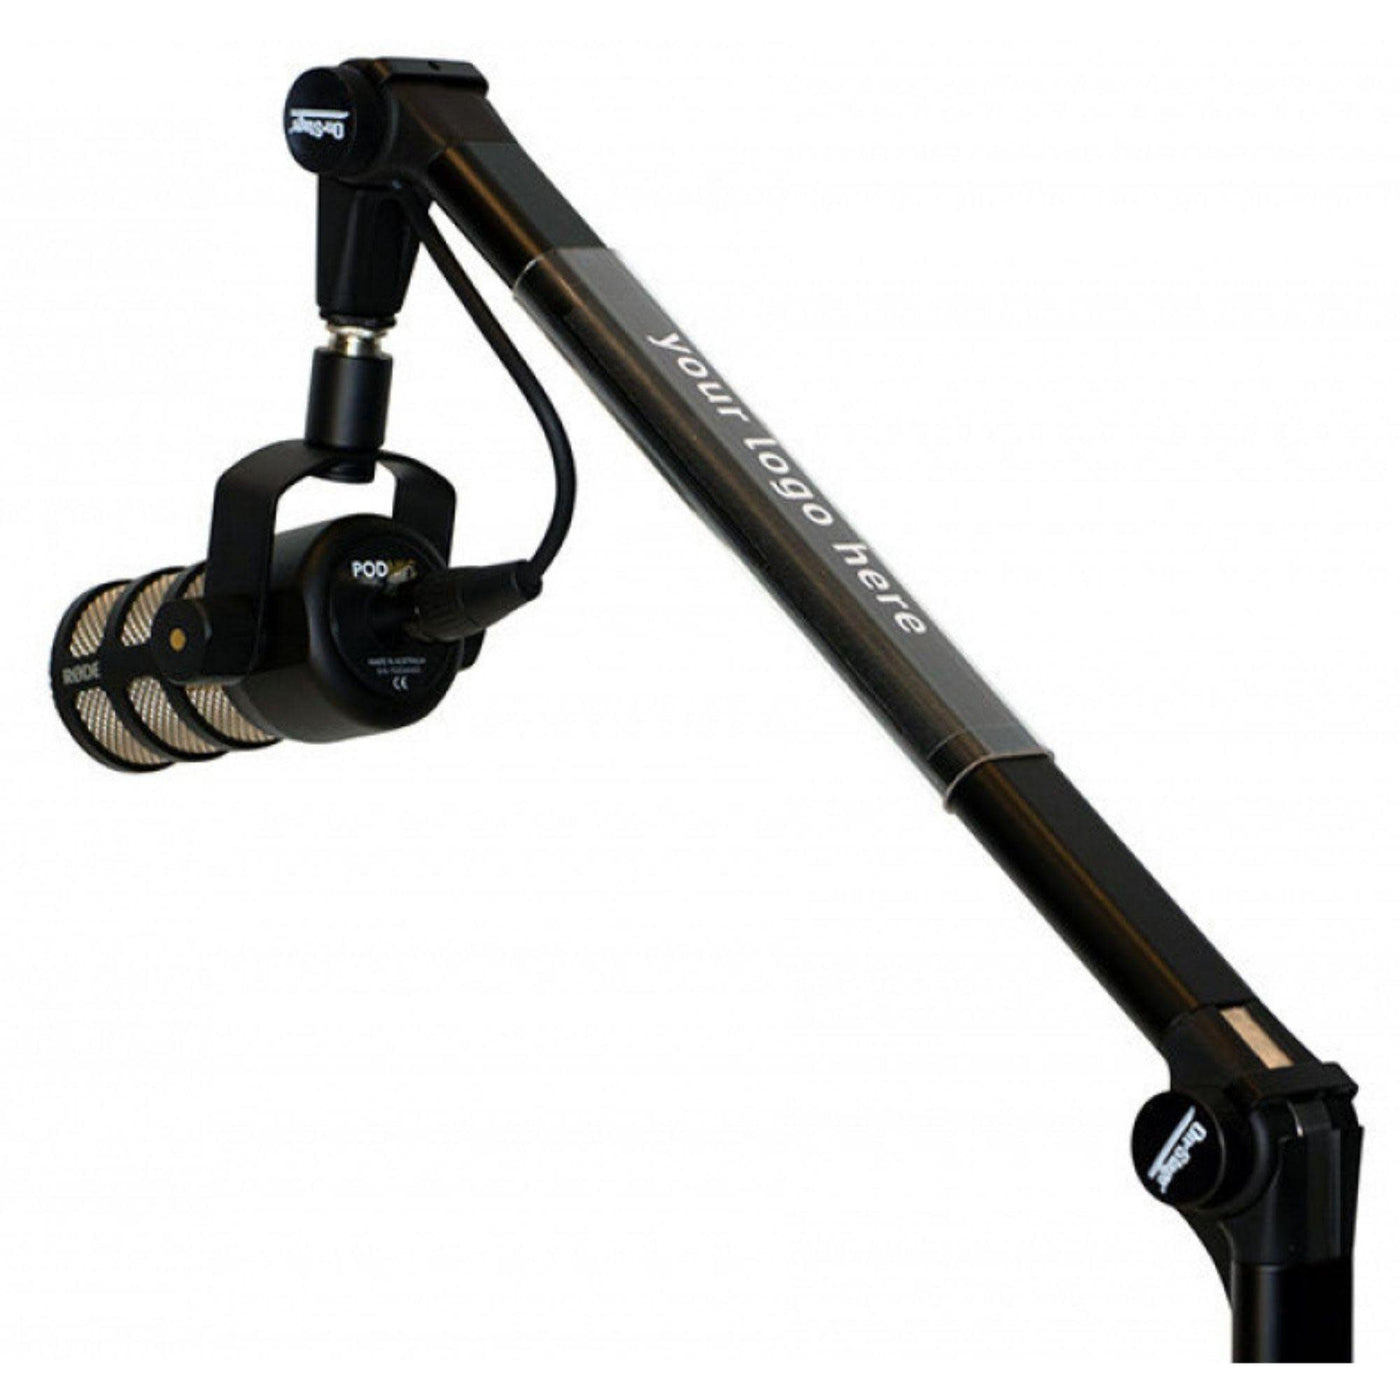 Microphone Boom Arm